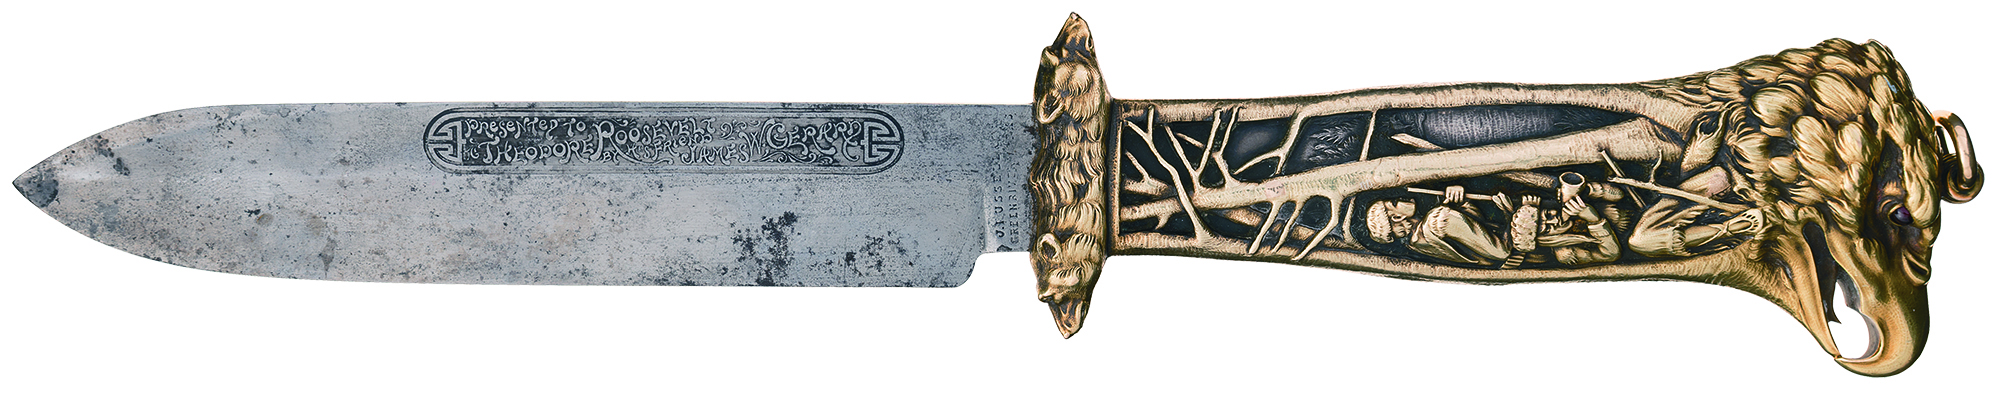 President Theodore's Roosevelt's knife.